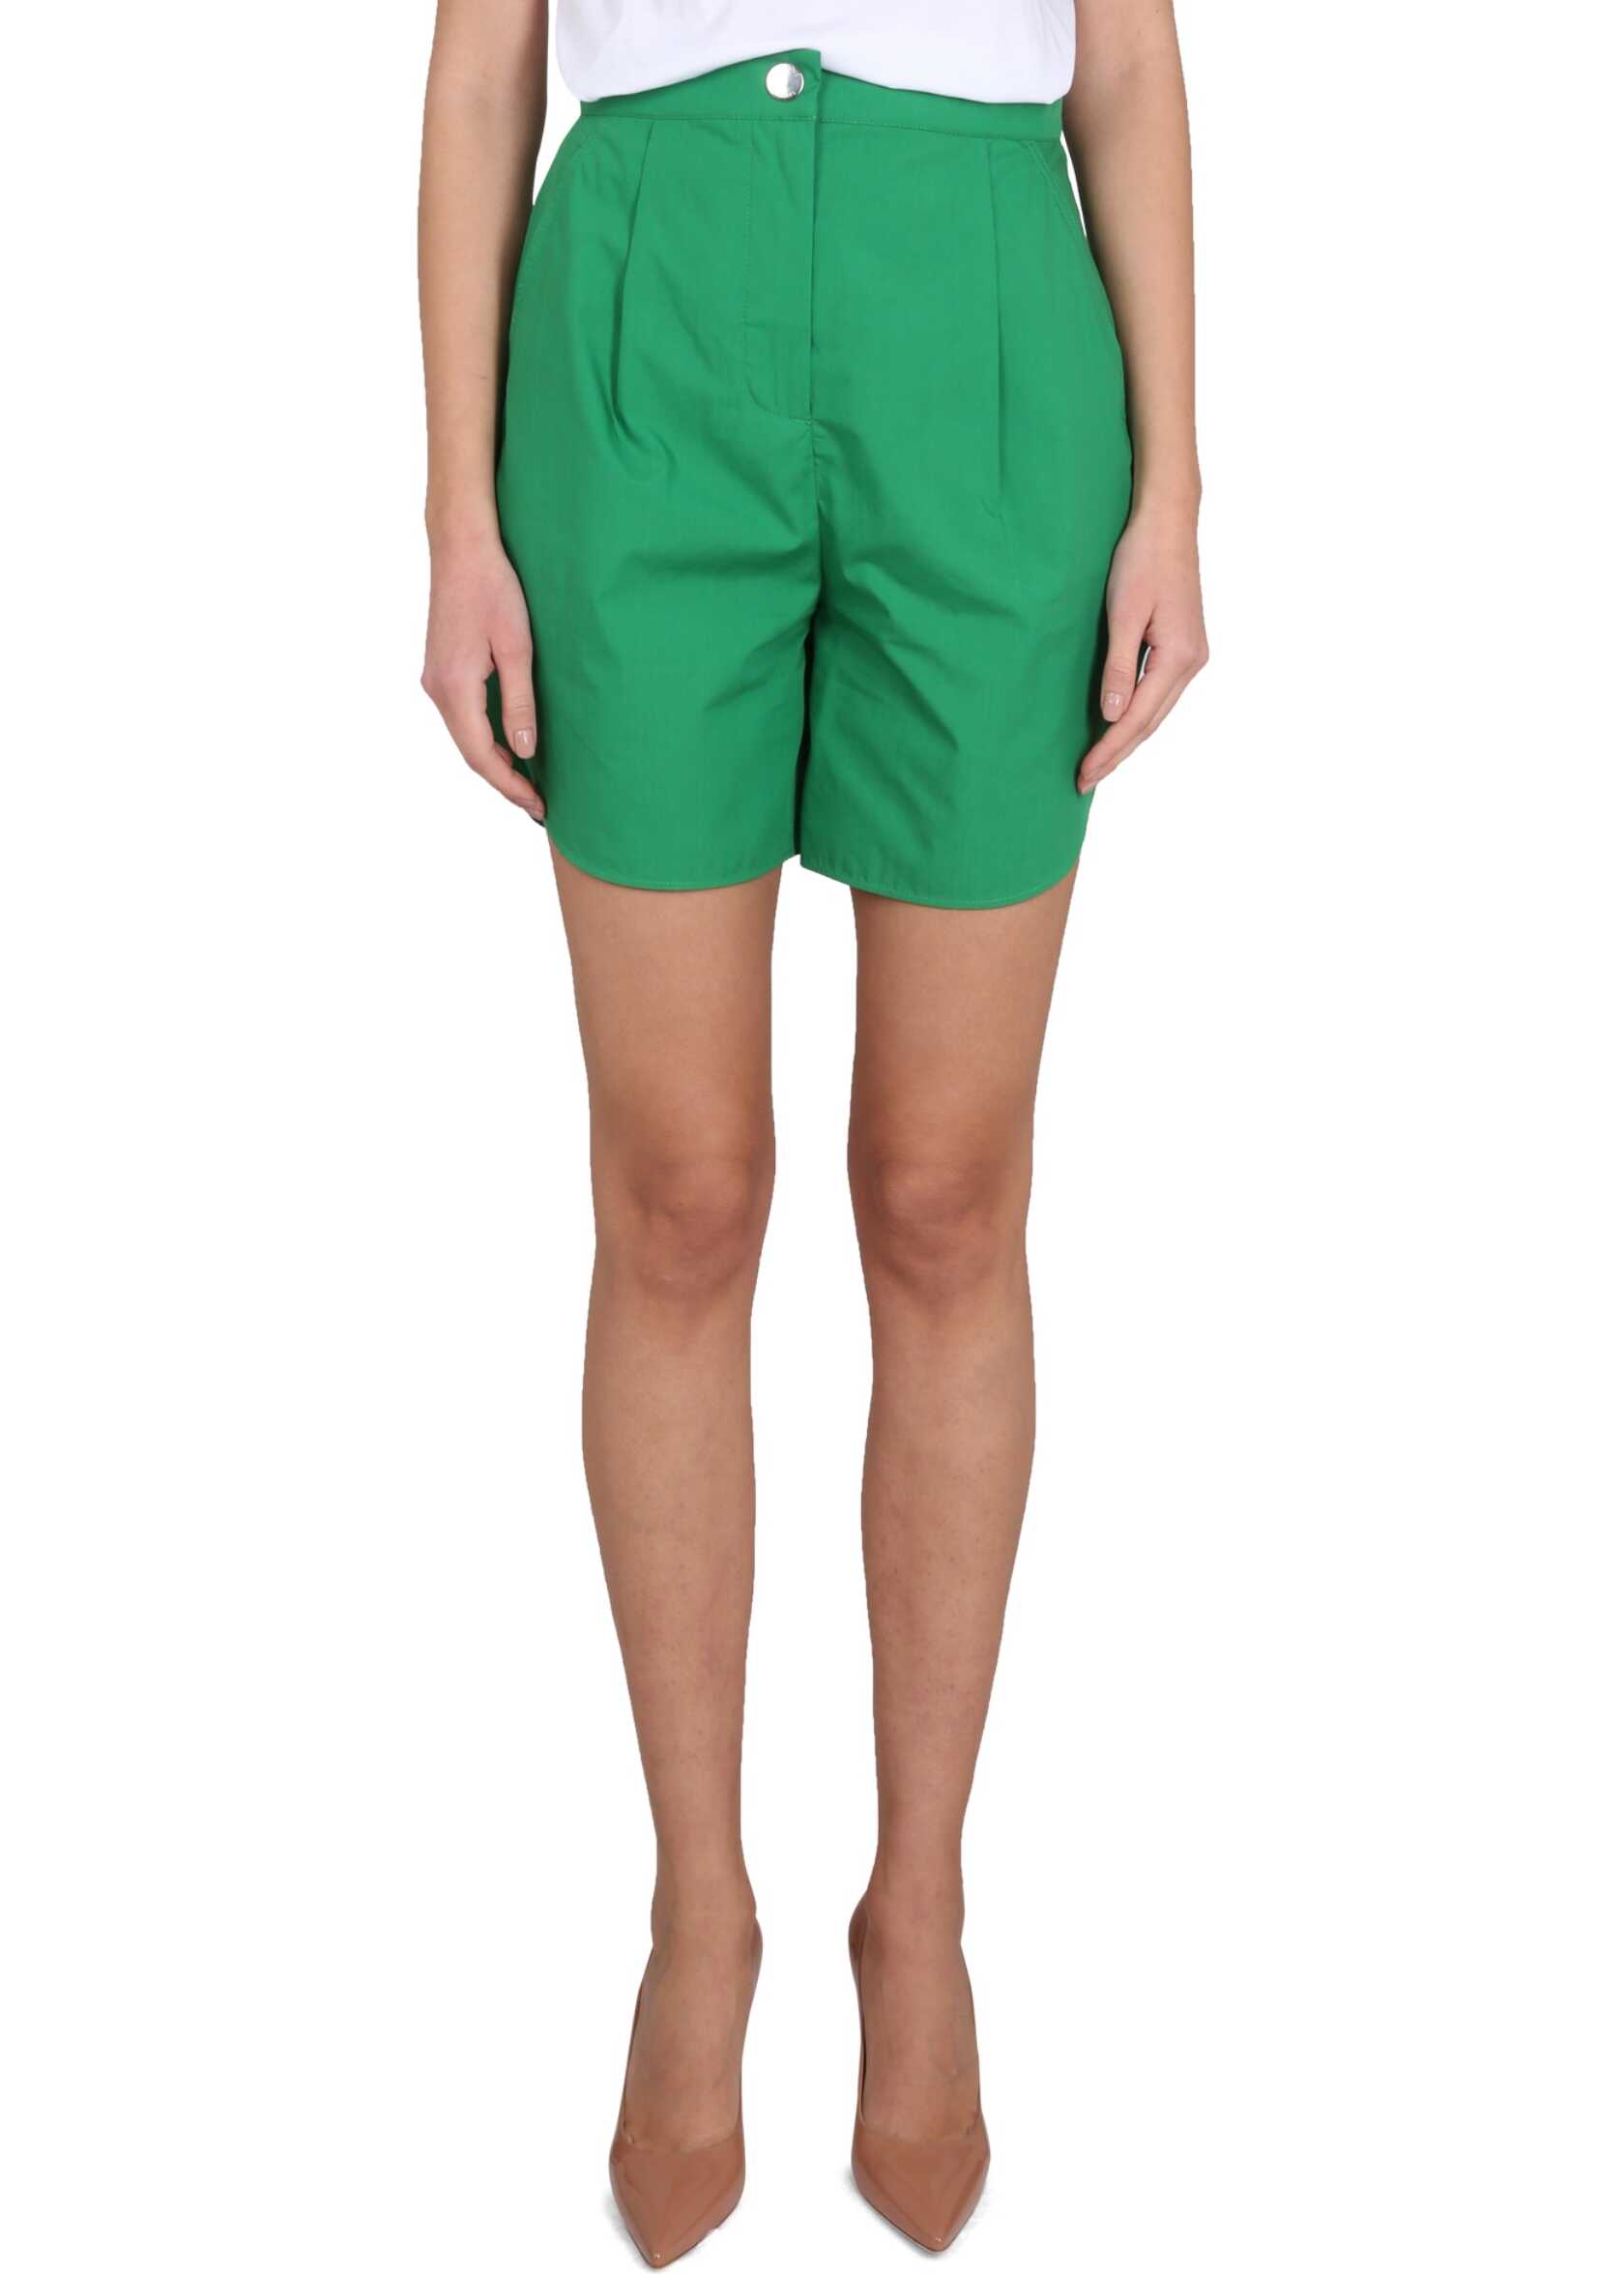 LOVE Moschino "Sport Chic" Shorts GREEN image8